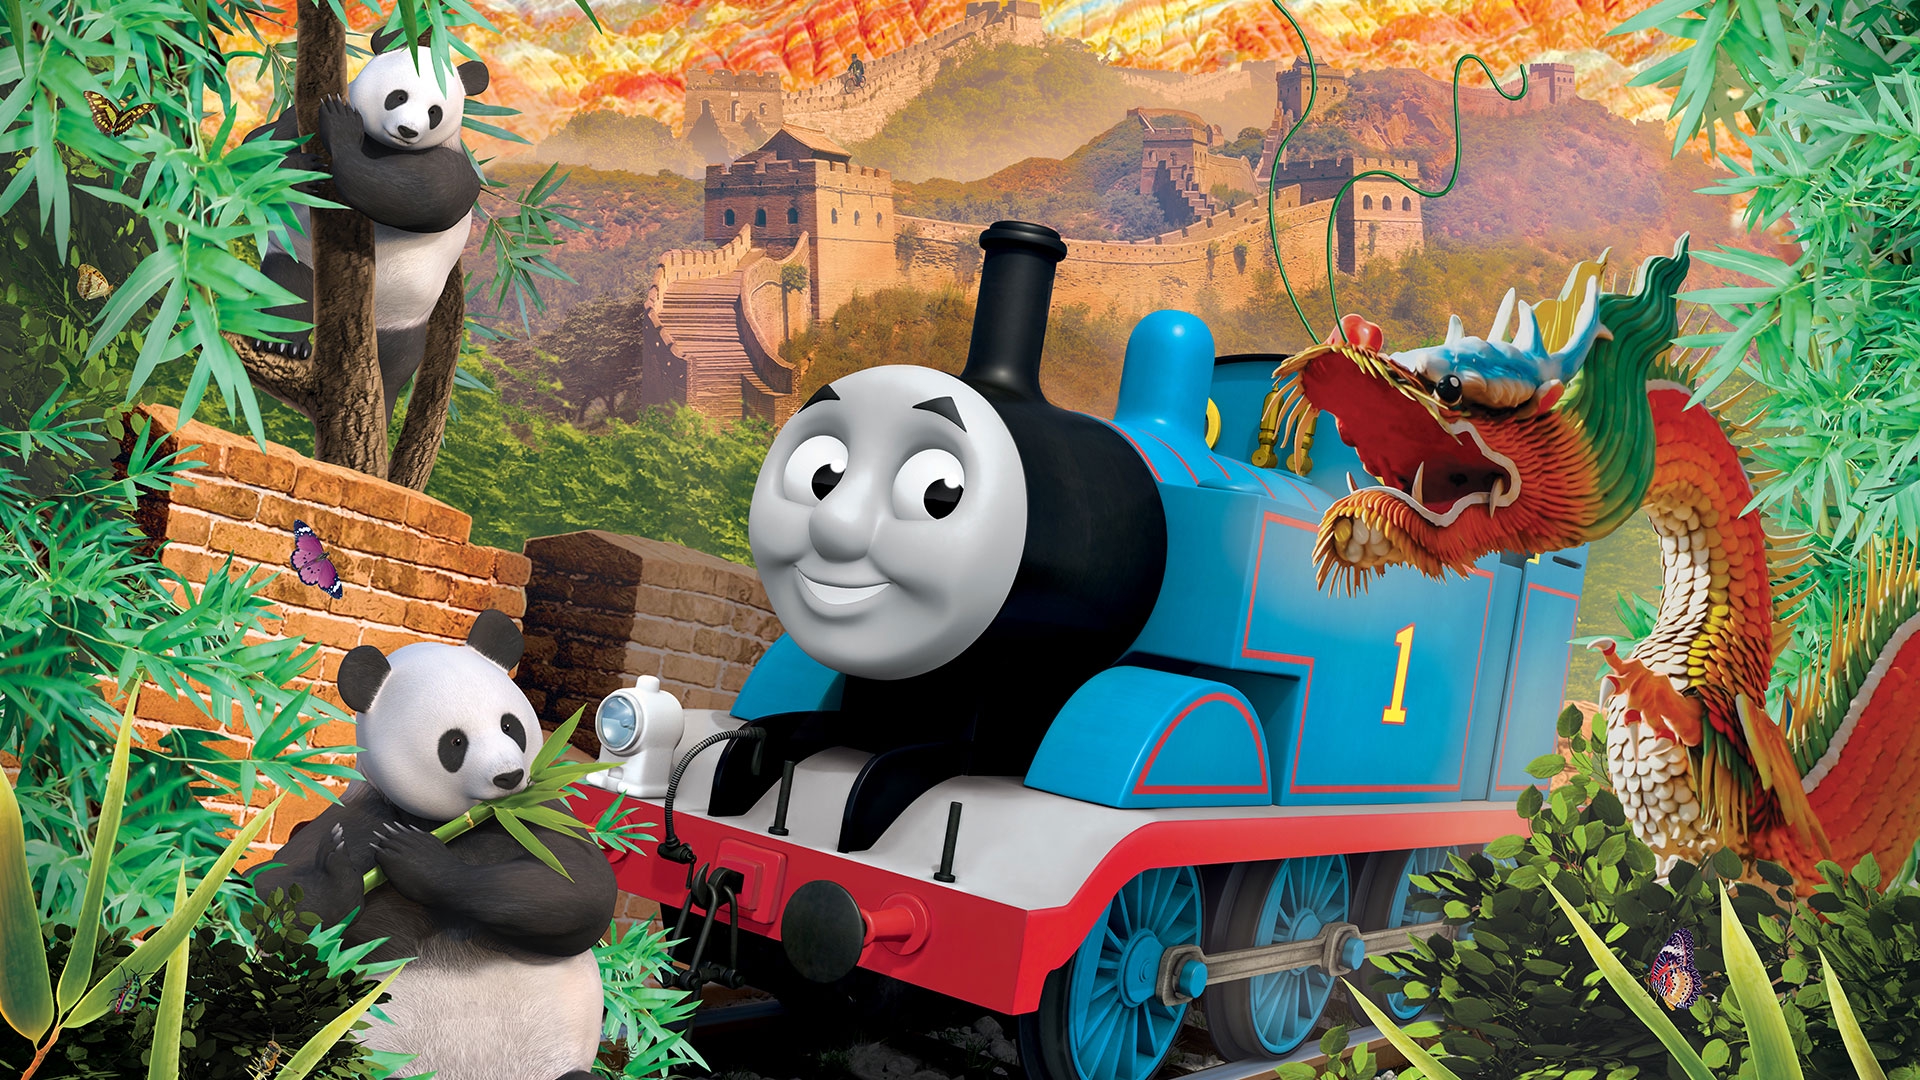 Watch Thomas & Friends: Big World! Big Adventures! - The Movie